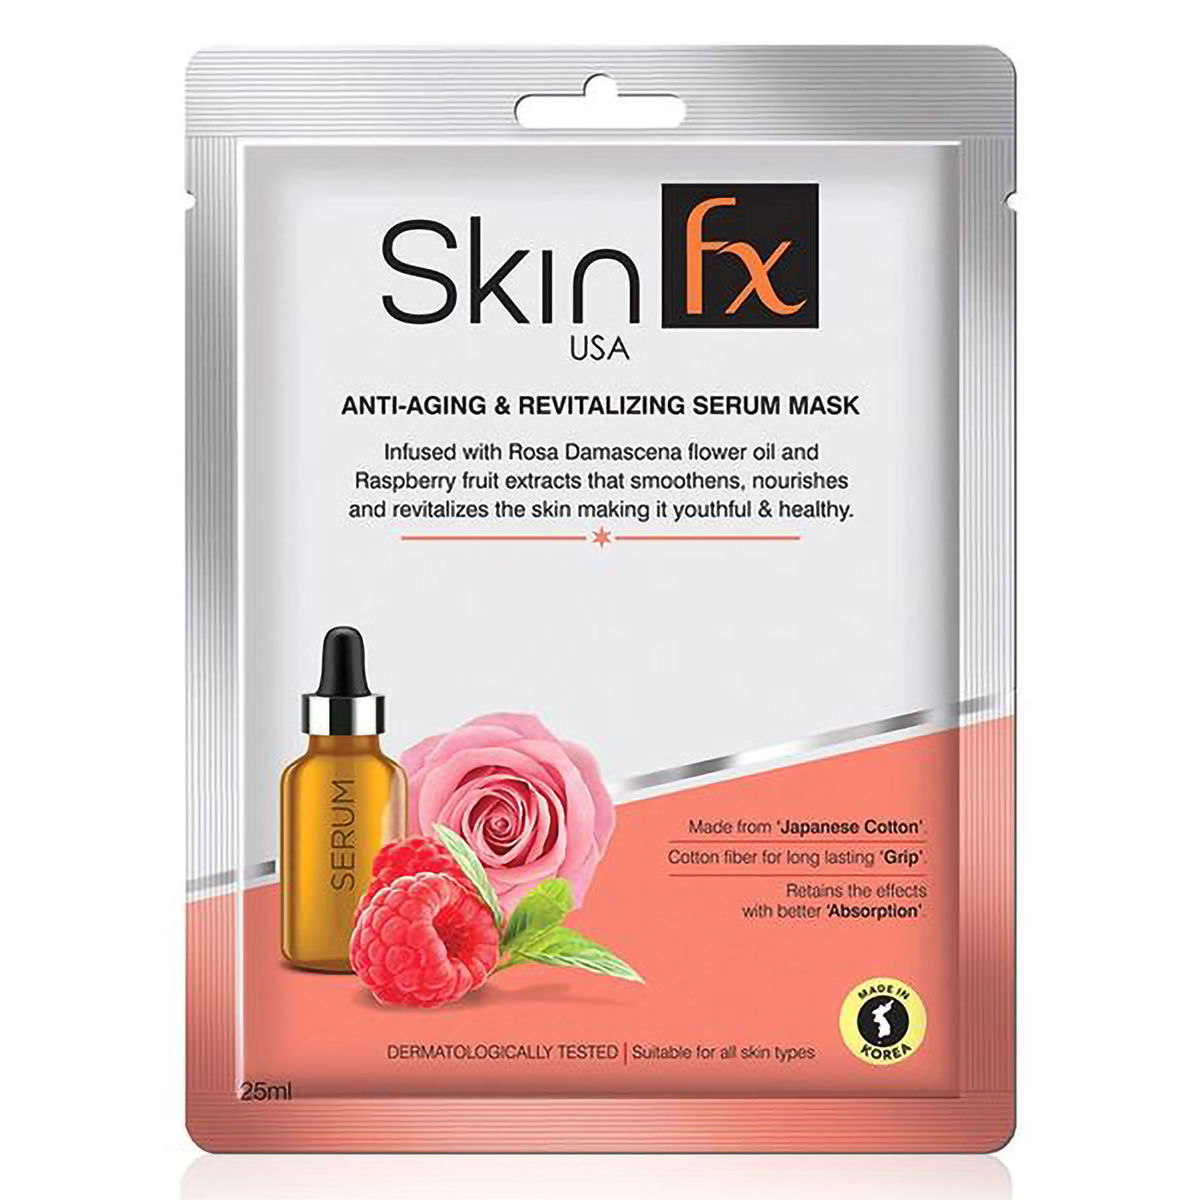 Buy Skin Fx Anti-Aging & Revitalizing Serum Mask, 25 ml Online